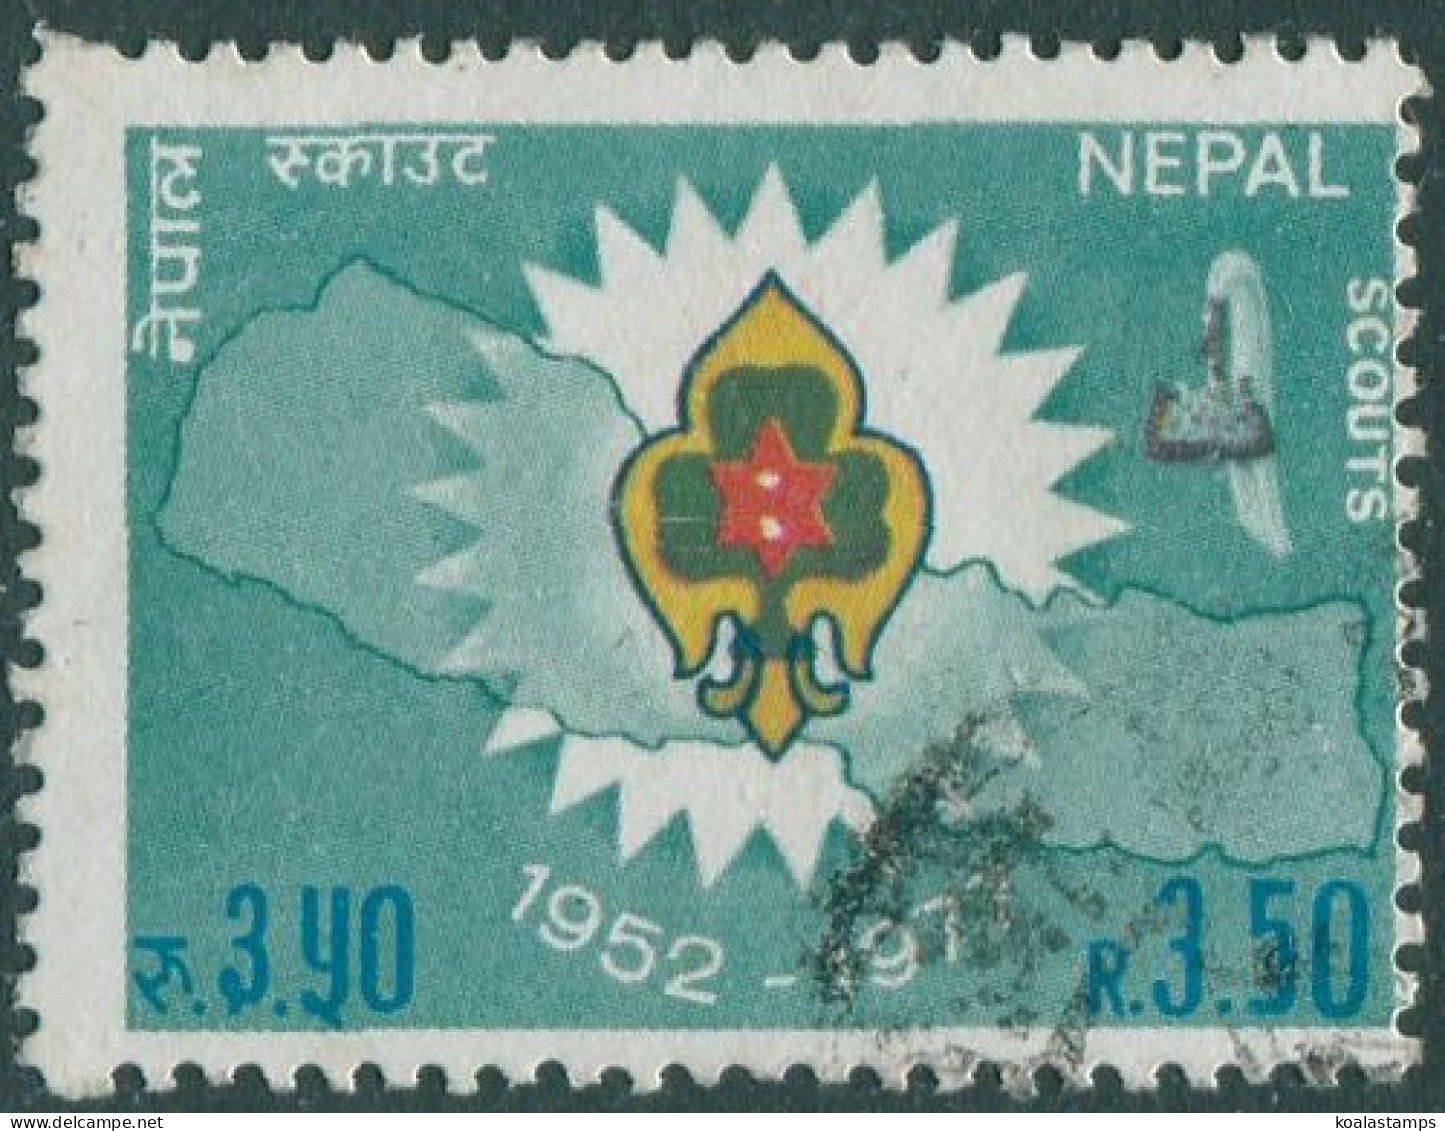 Nepal 1977 SG354 3r.50 Map And Scout Emblem FU - Népal